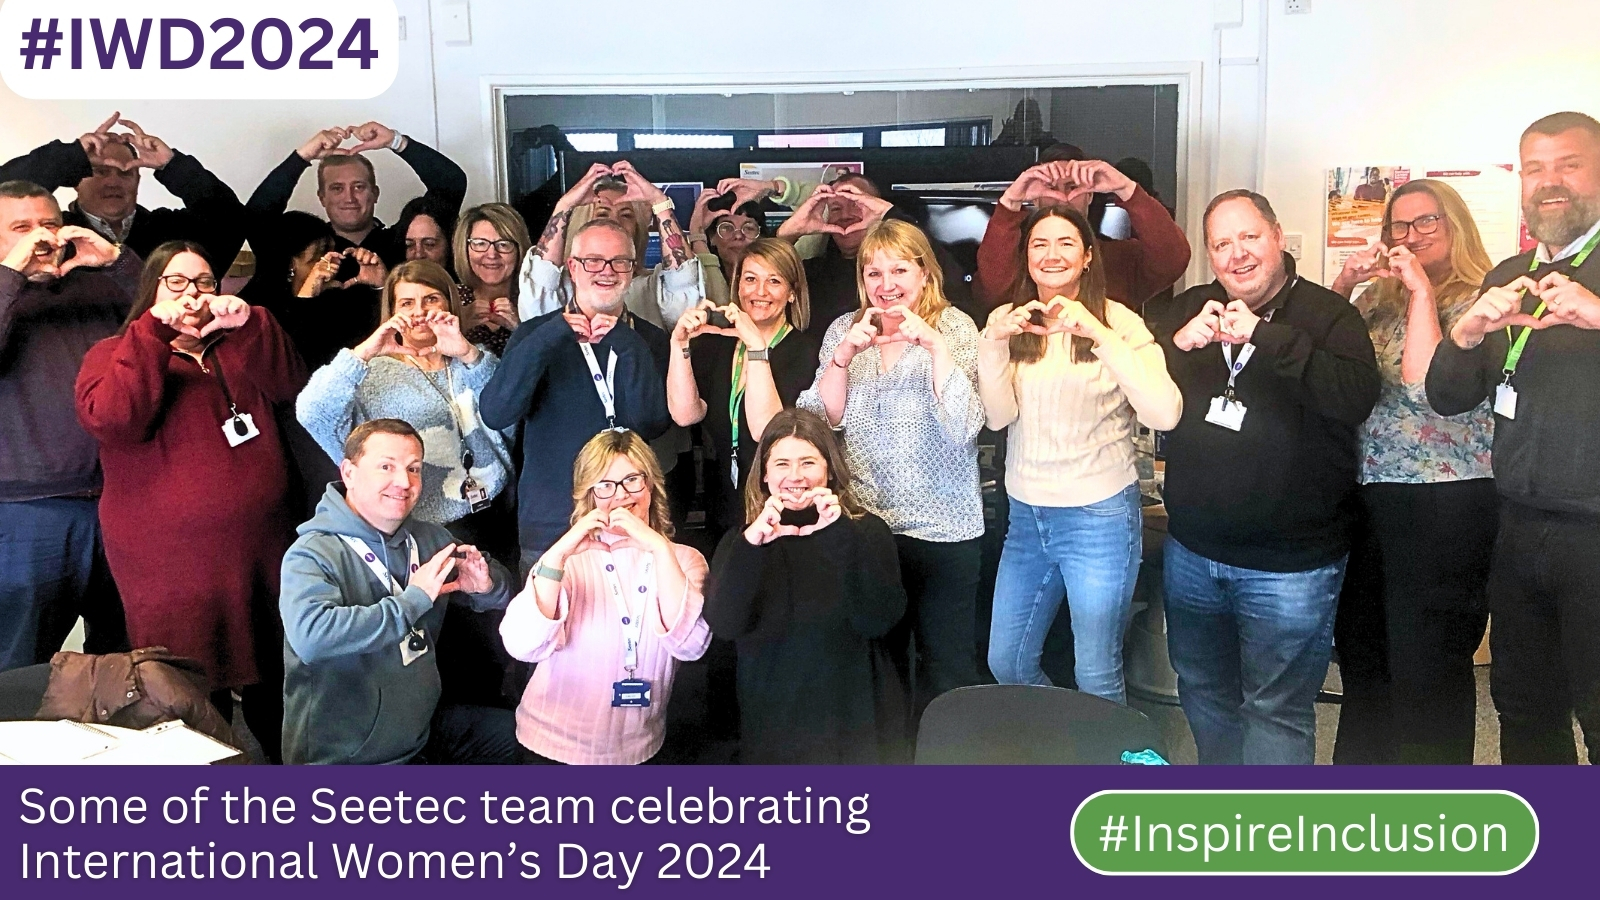 Seetec team in Exeter celebrating International Women's Day 2024